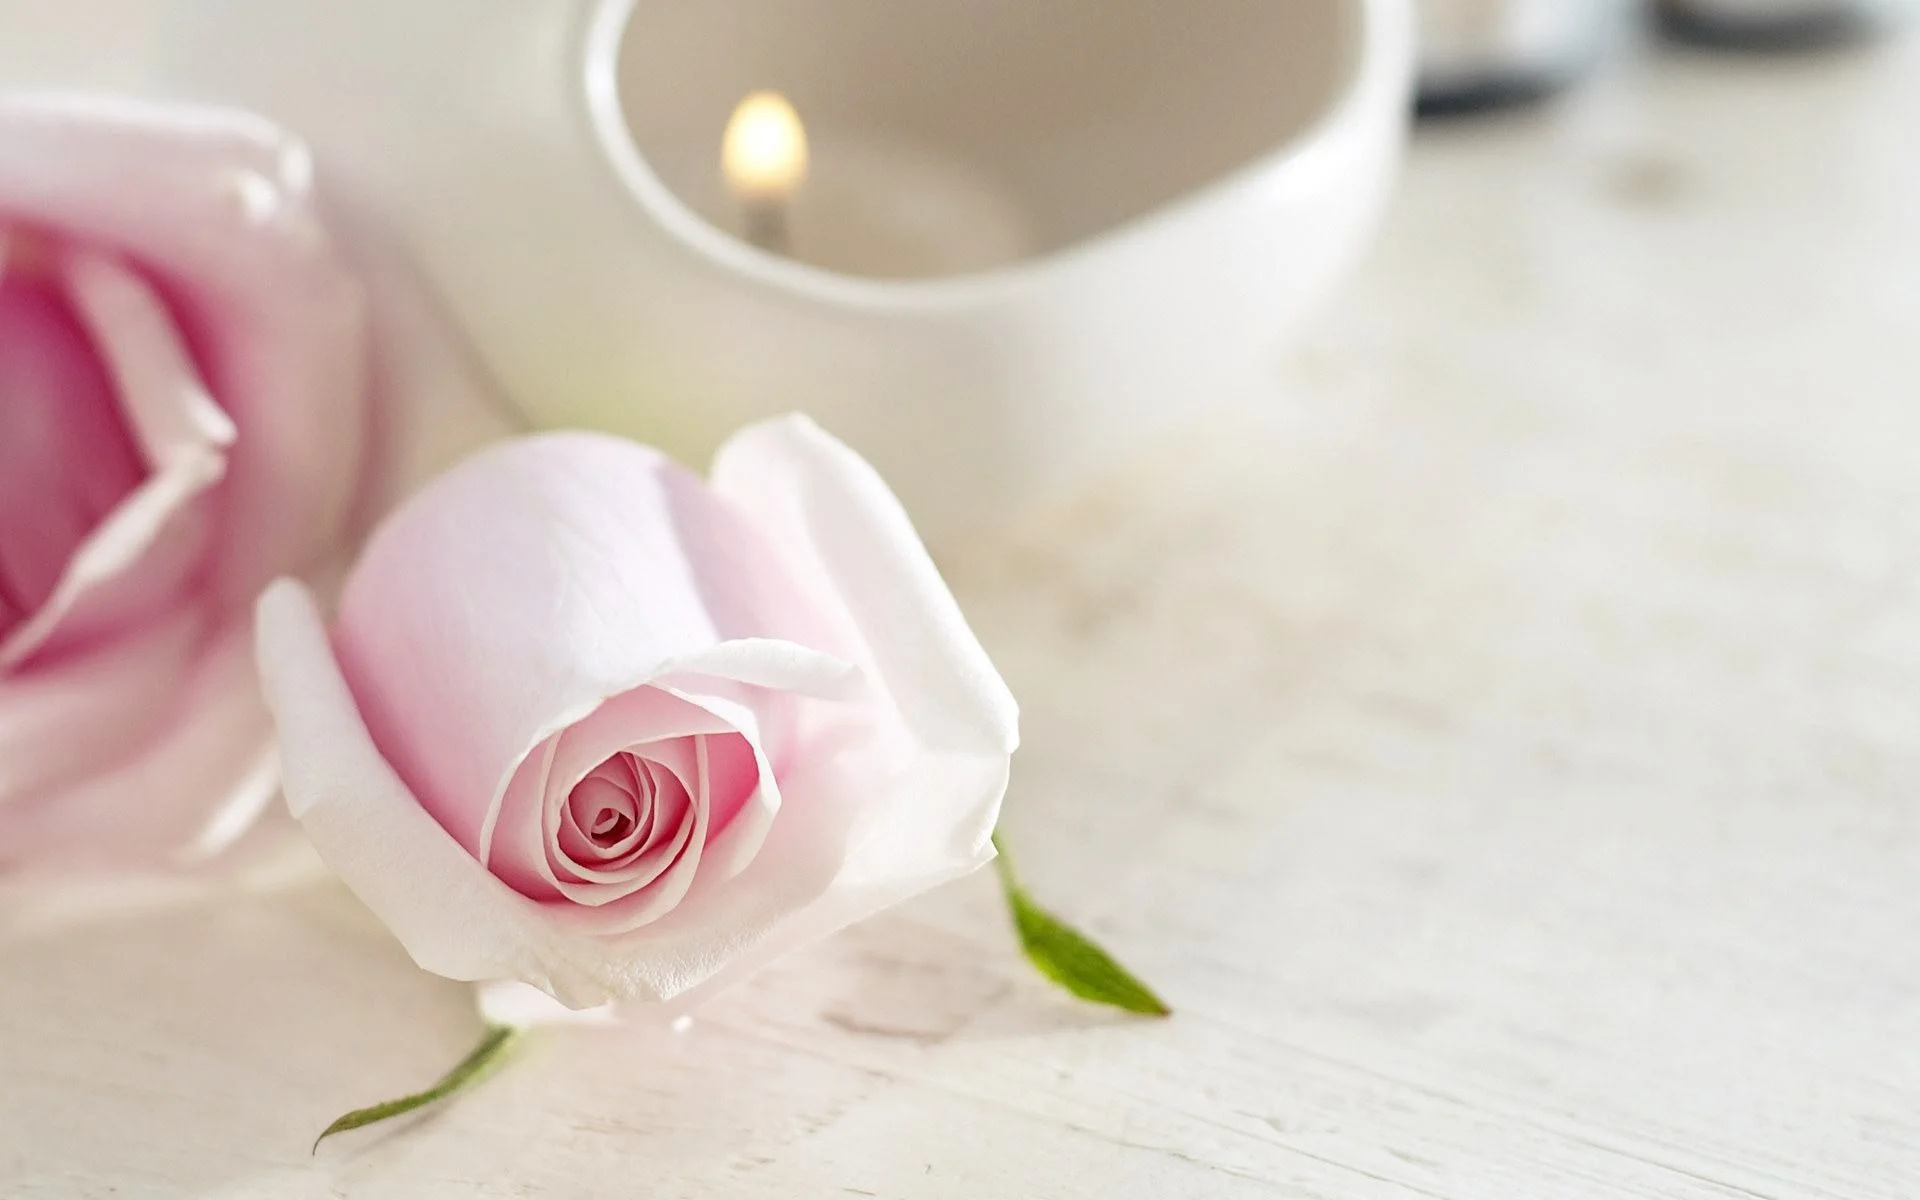 Wallpapers Backgrounds – wallpapers background white roses beautiful nature light flower pink